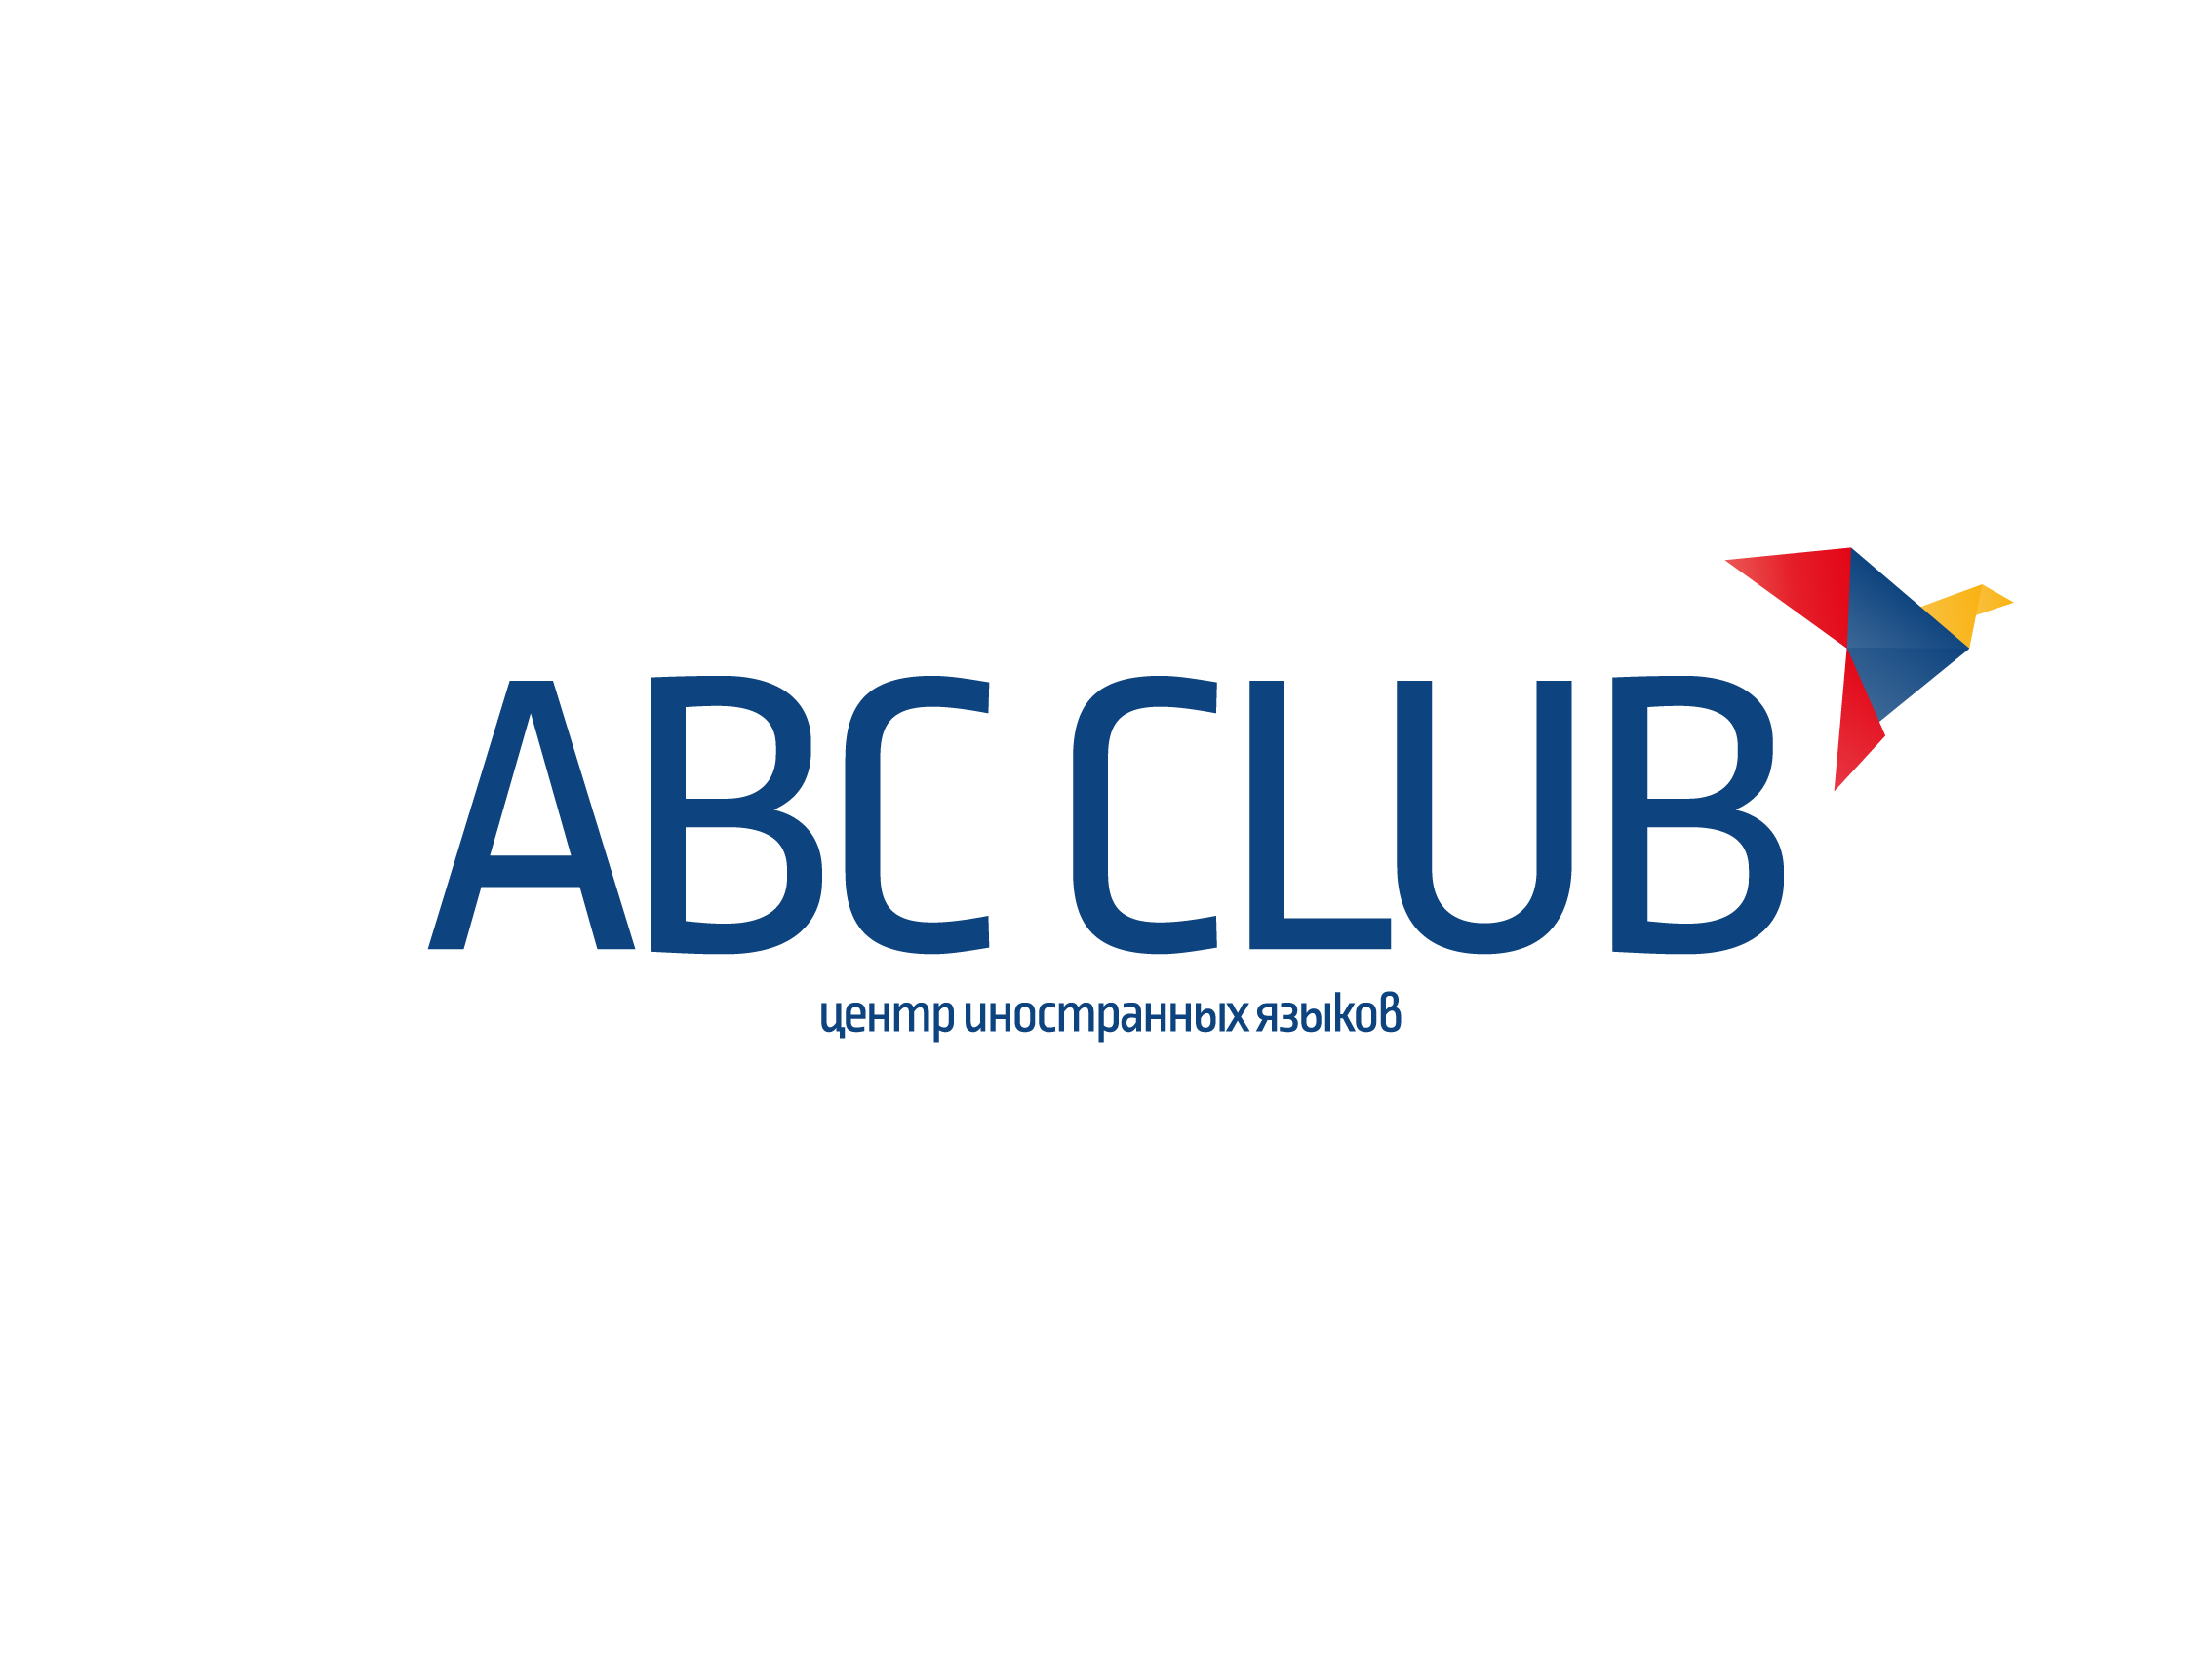 ABC club